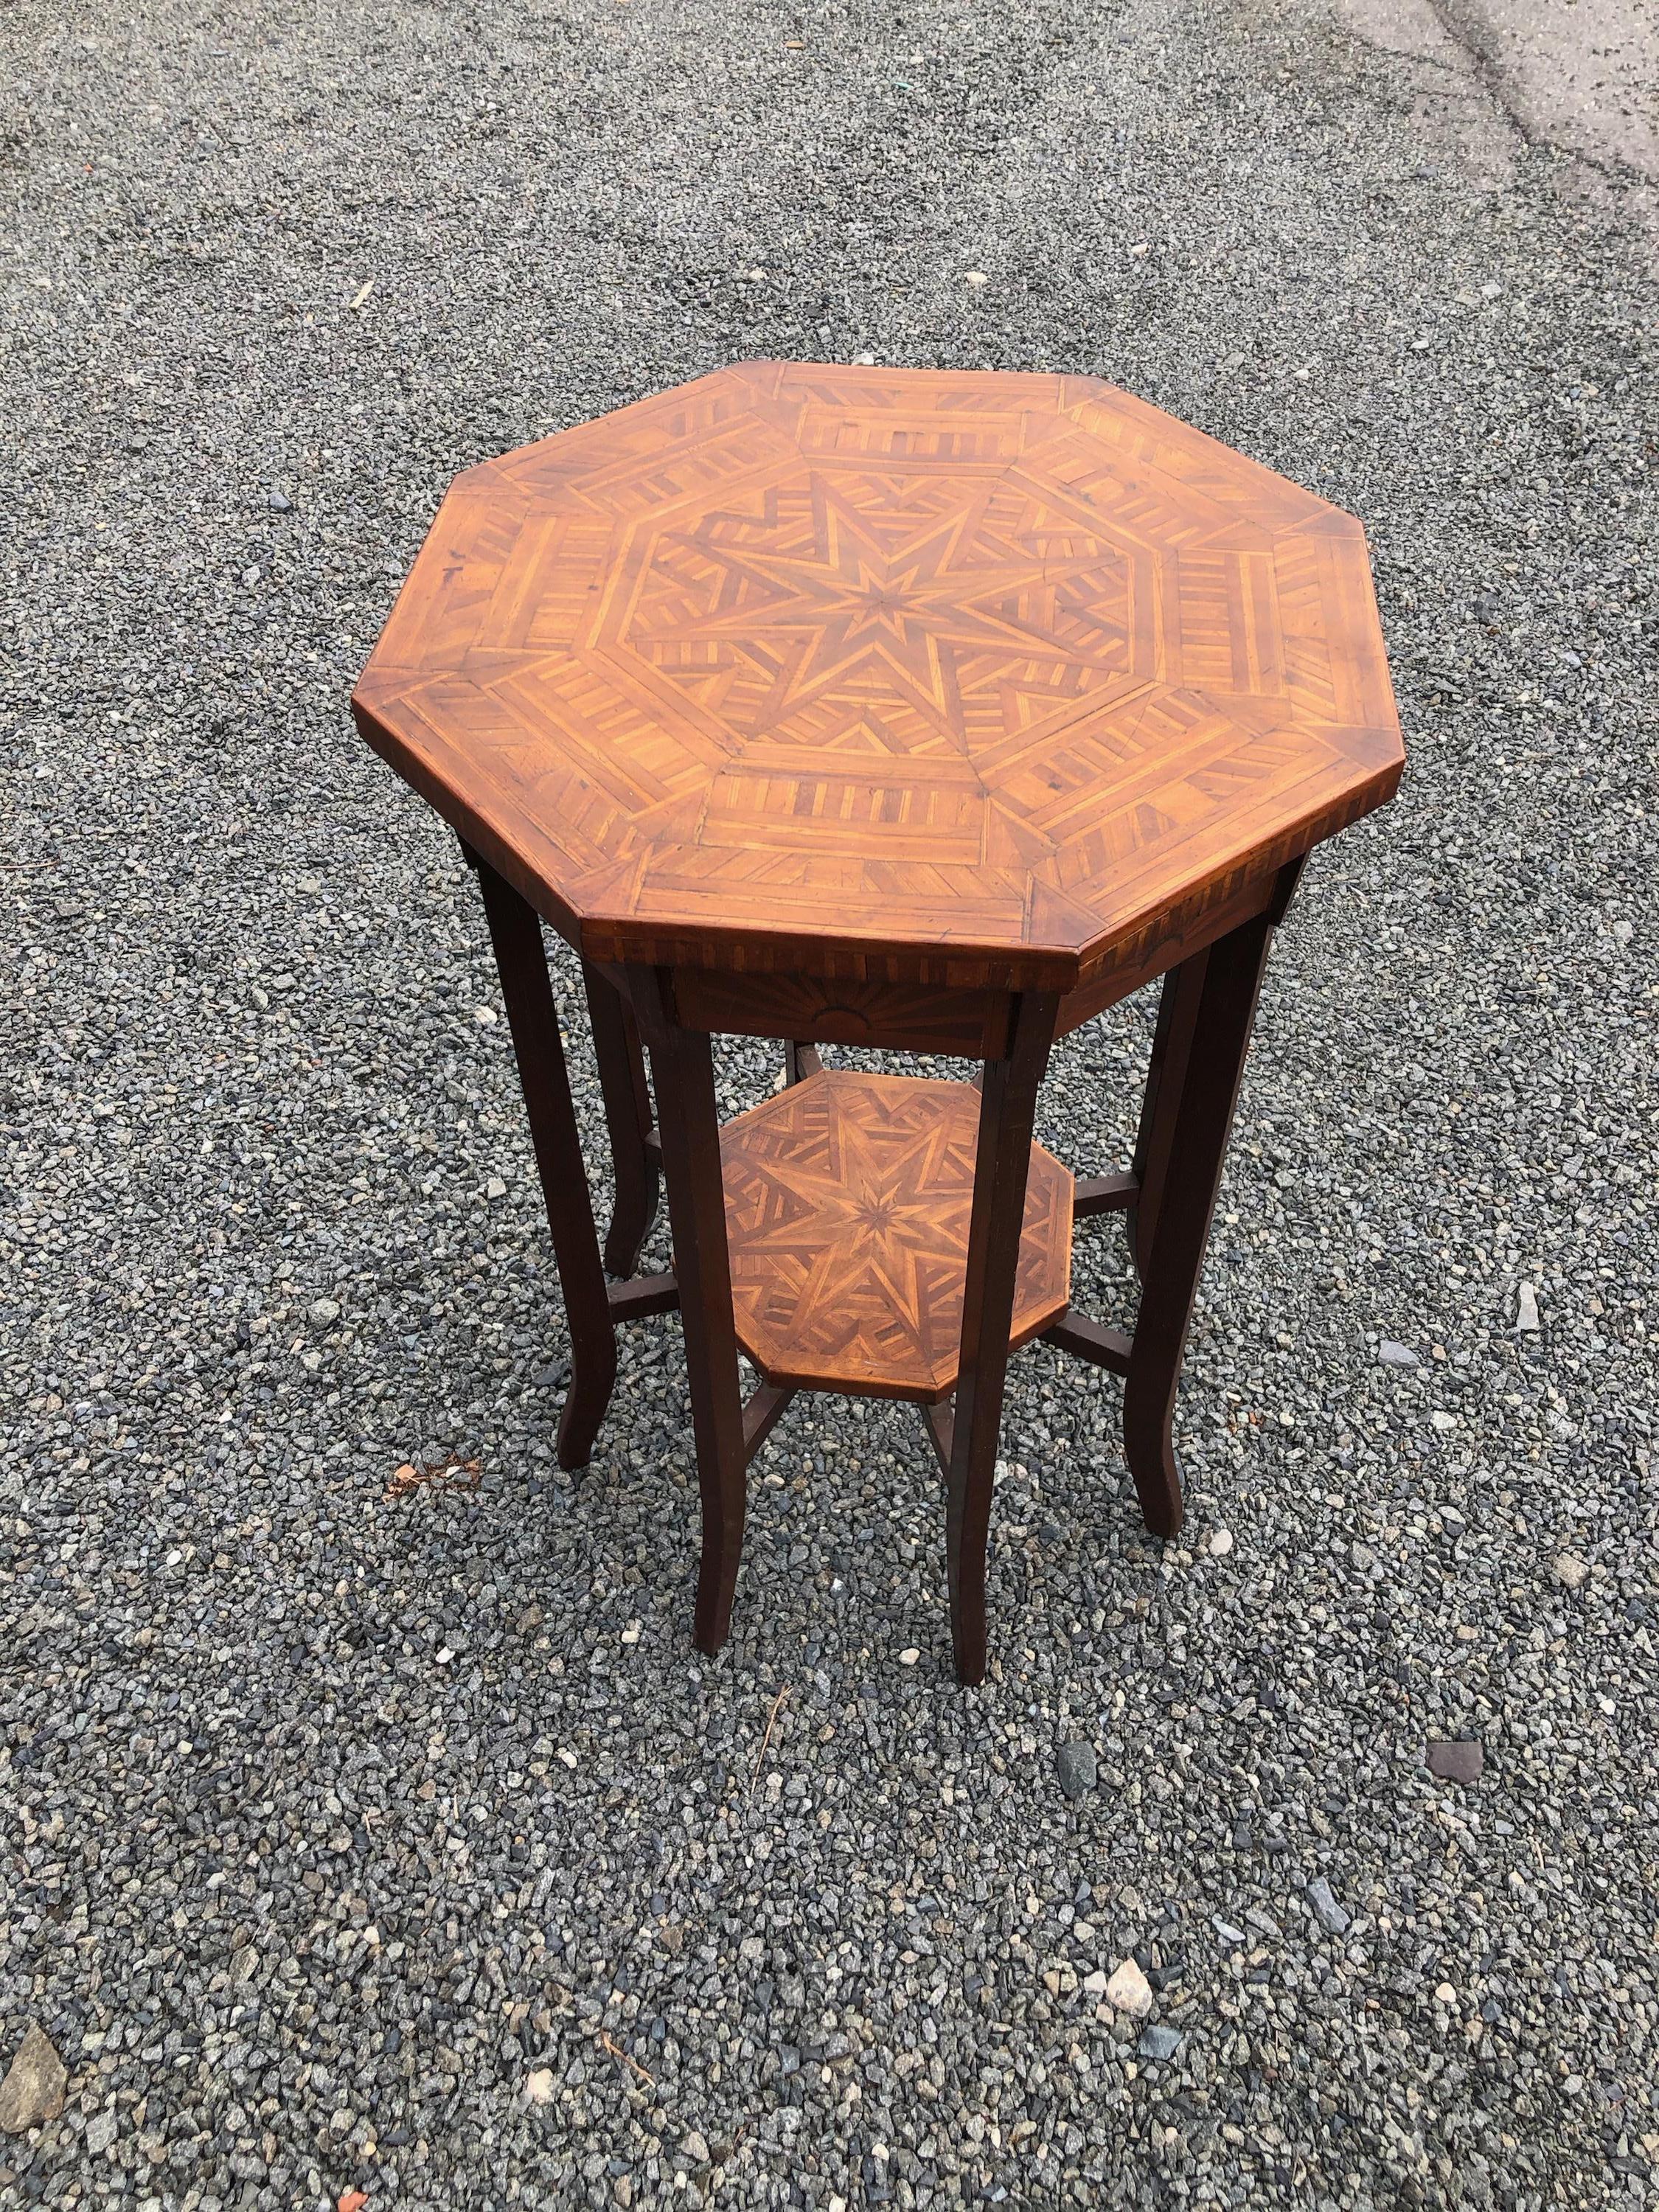 Elegant Antique Octagonal Side End Table with Inlaid Starburst Design 5